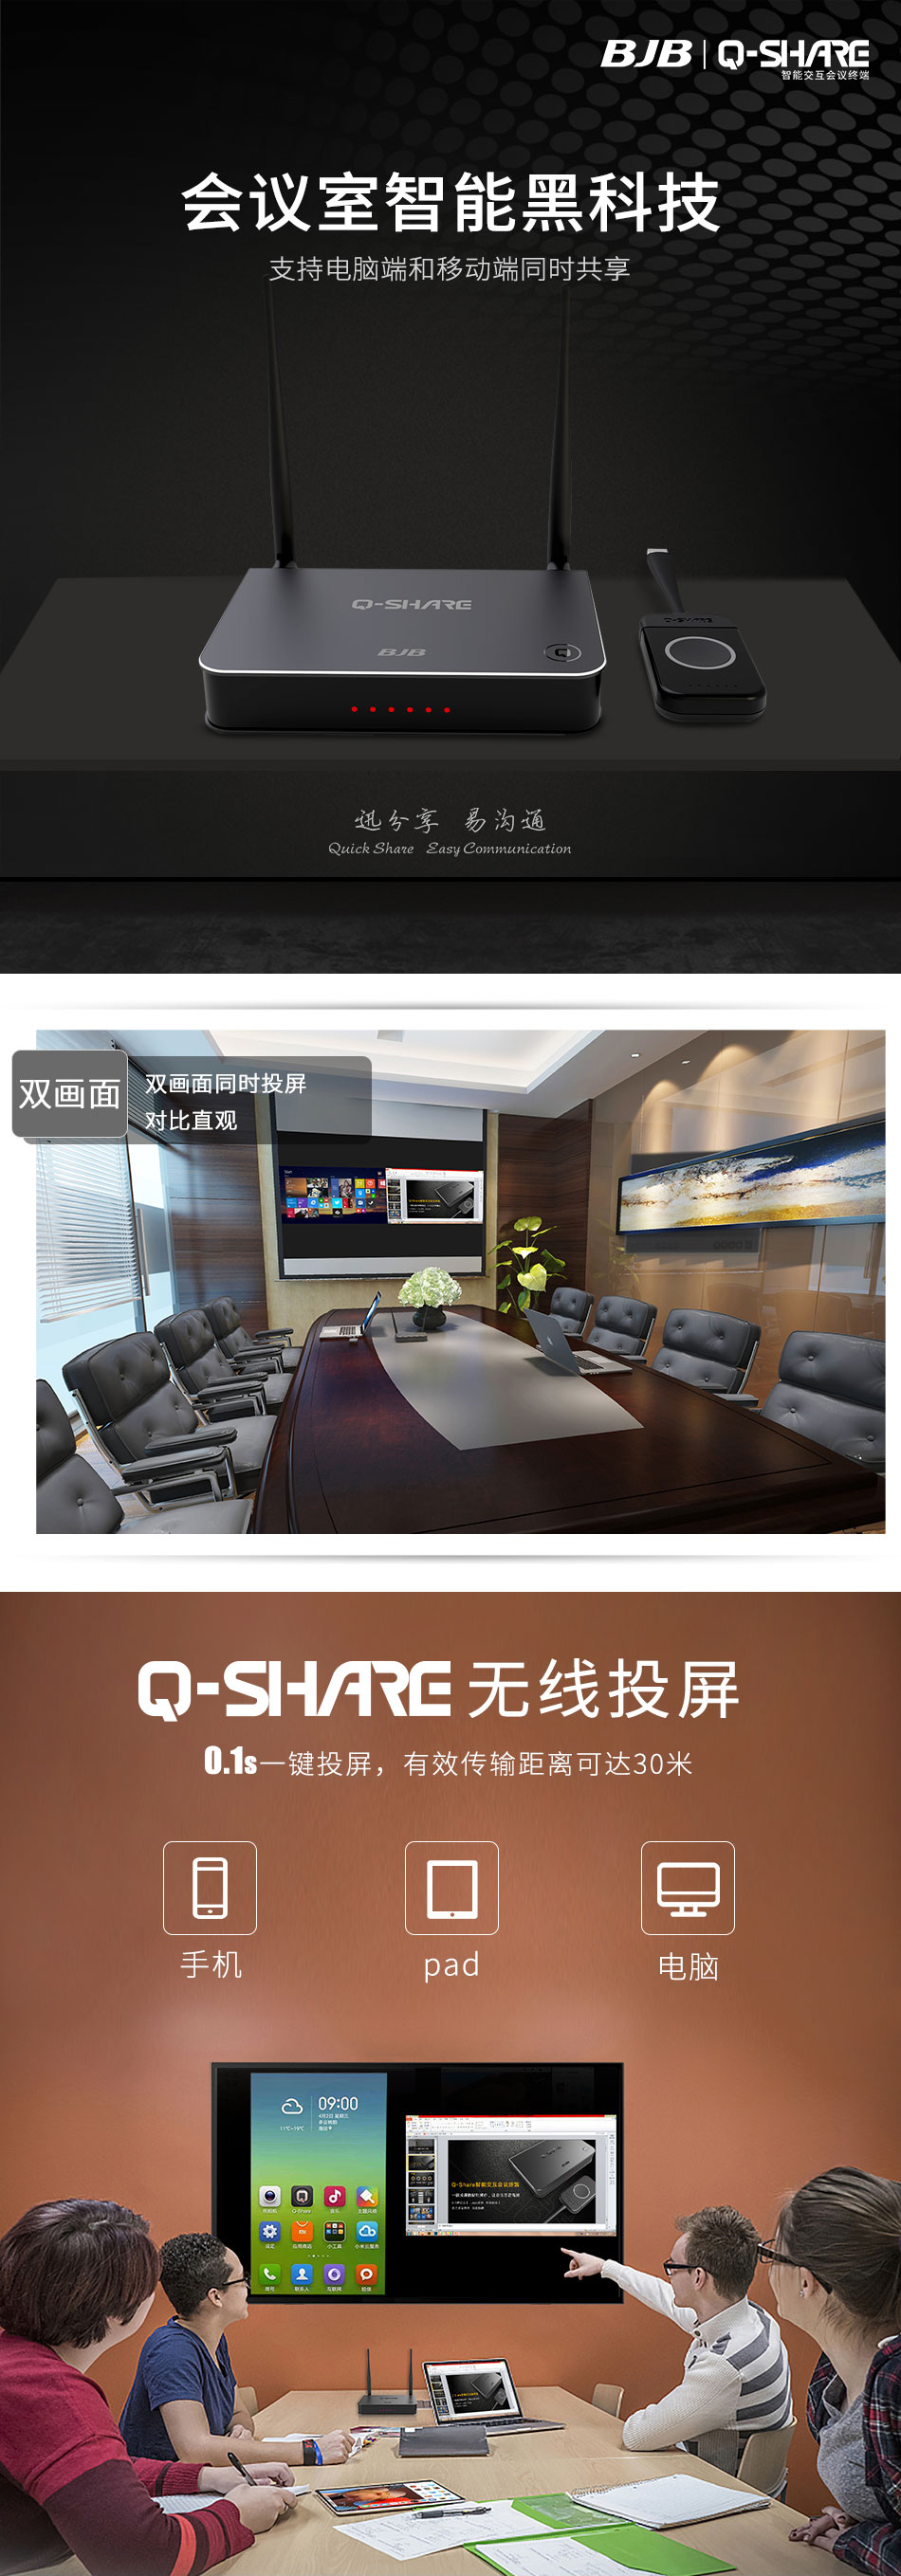 Q-Share(双画面)_01.jpg